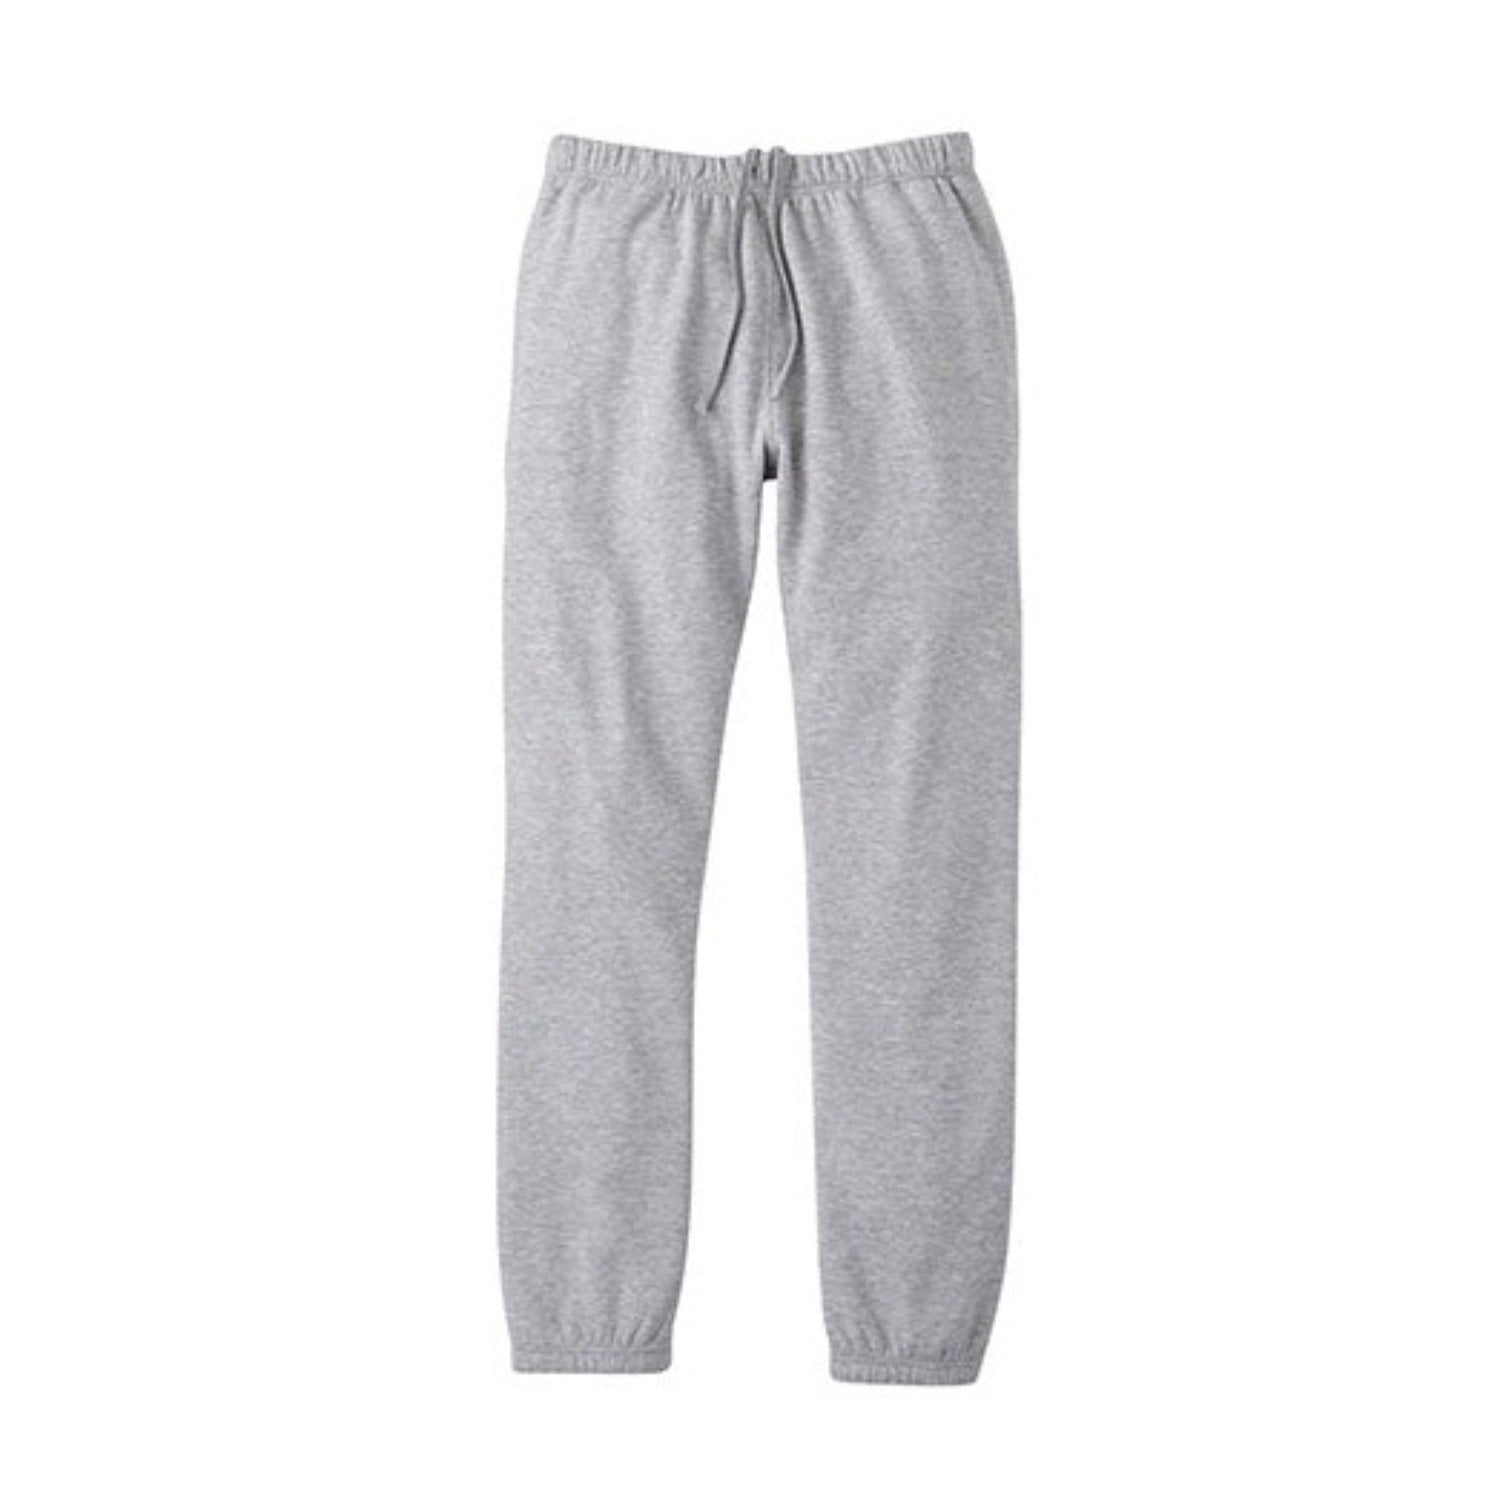 Men's Grey Sweatpants Front